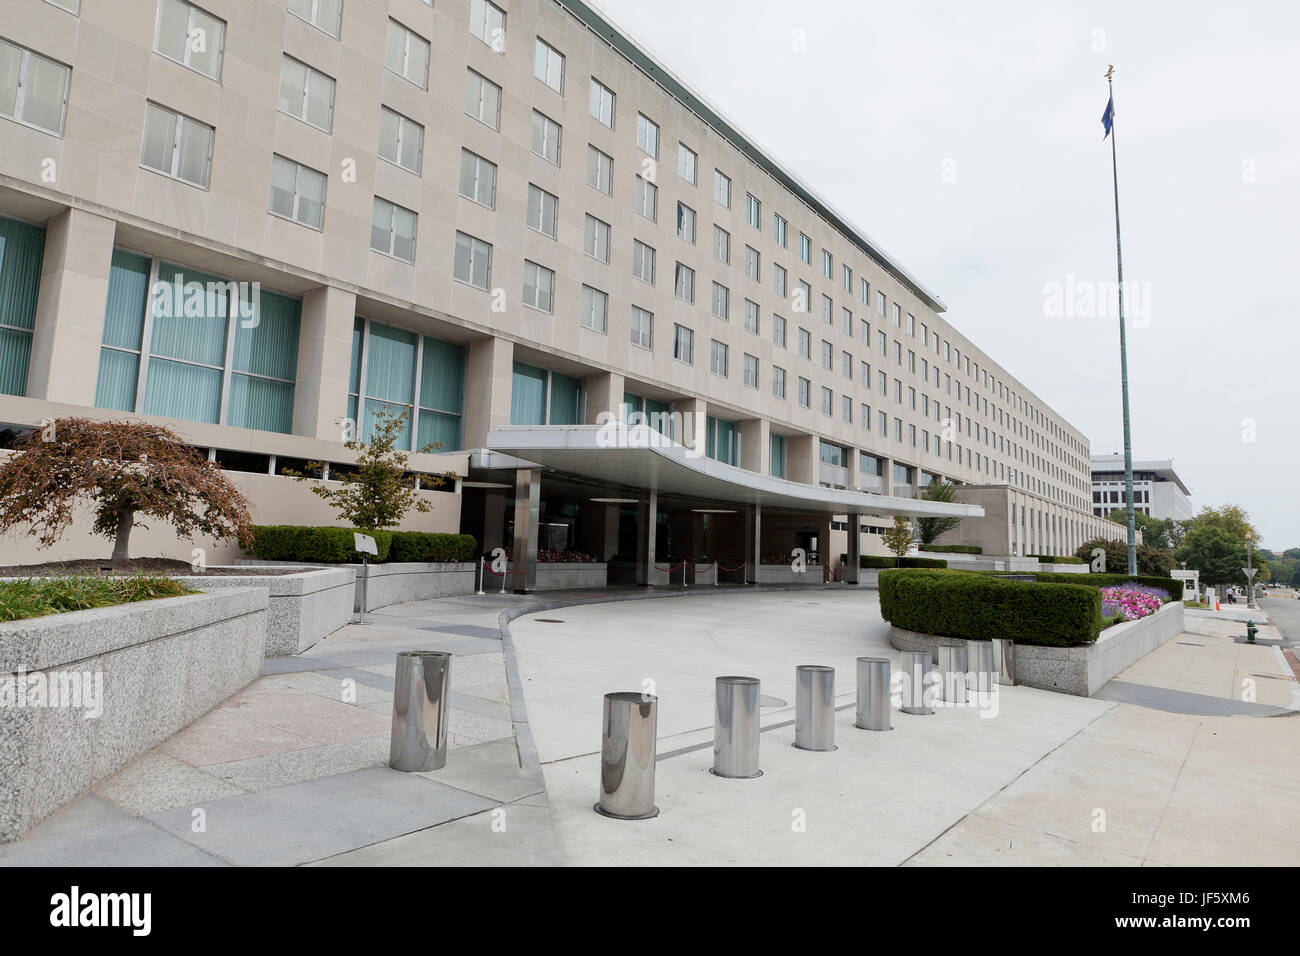 US Department of State Building - Washington, DC USA Stock Photo